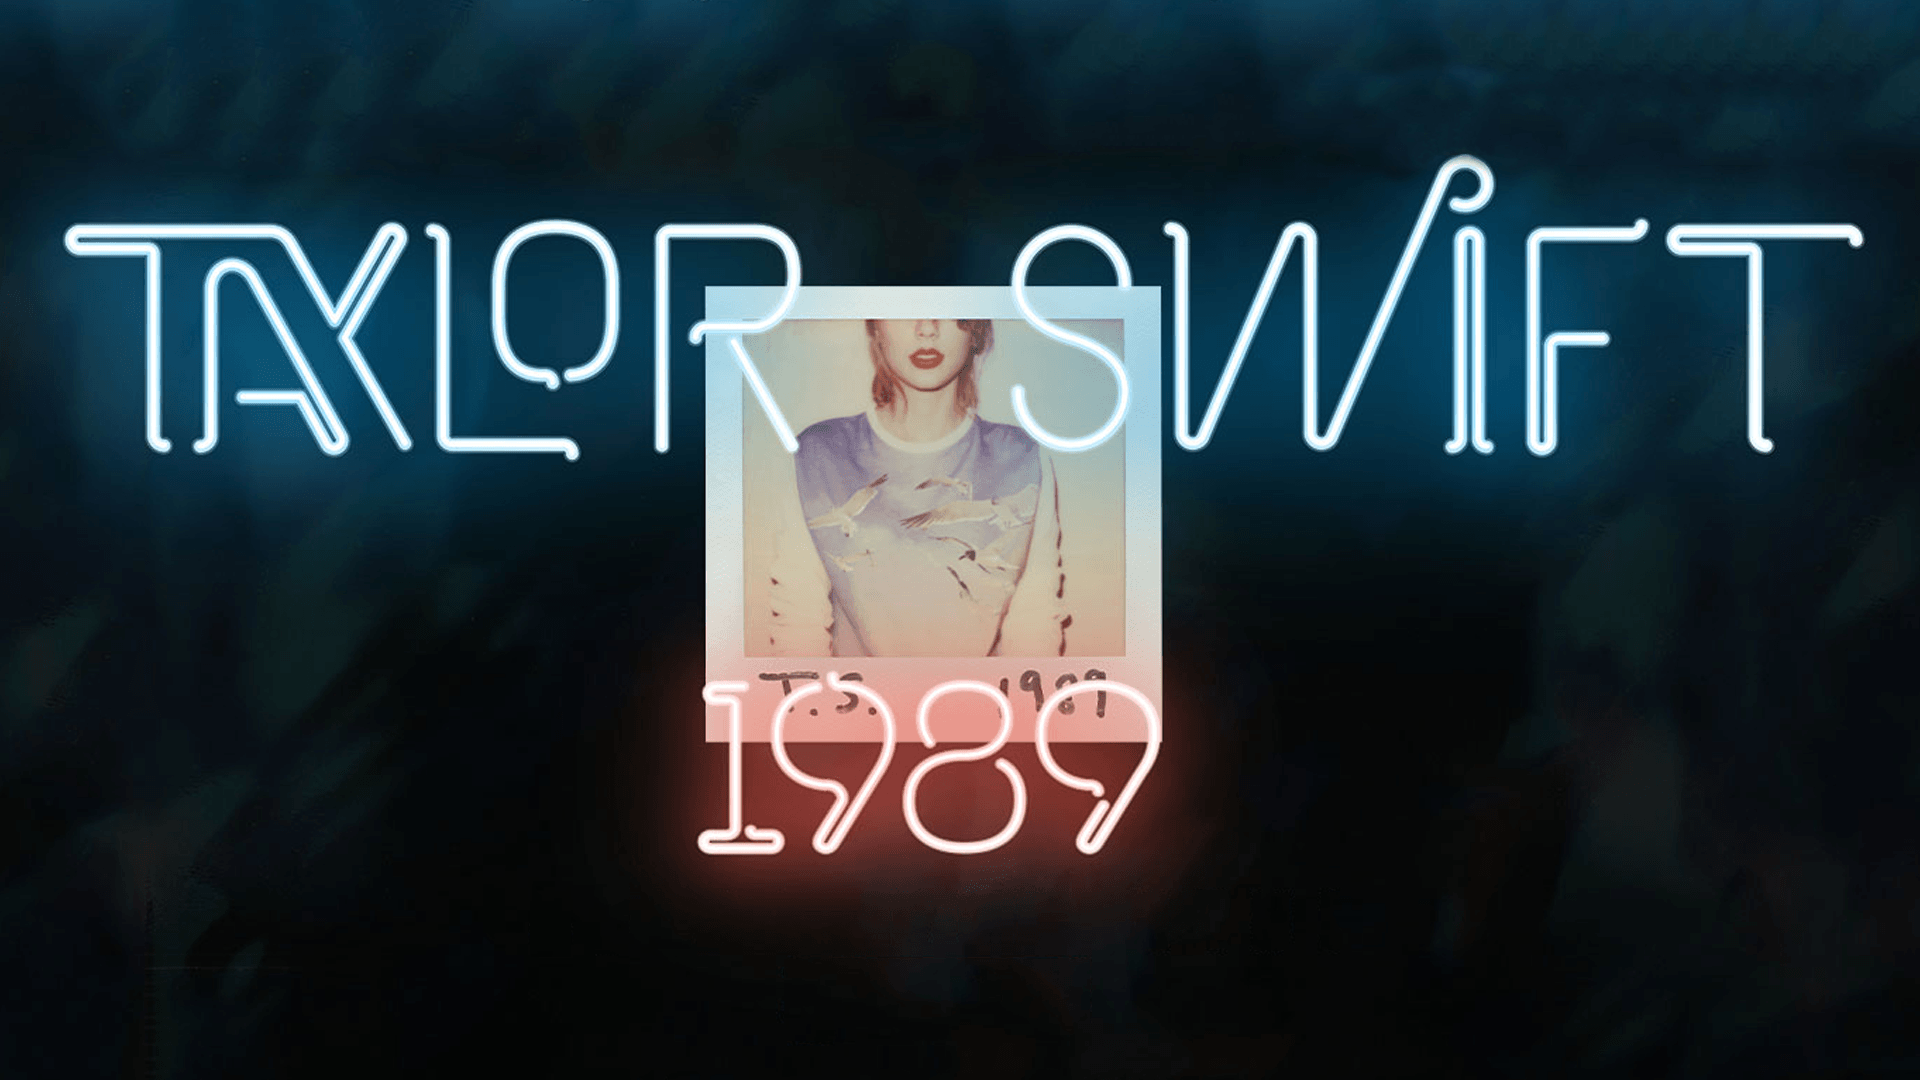 Neon 1989 Wallpaper [1080p]: TaylorSwift